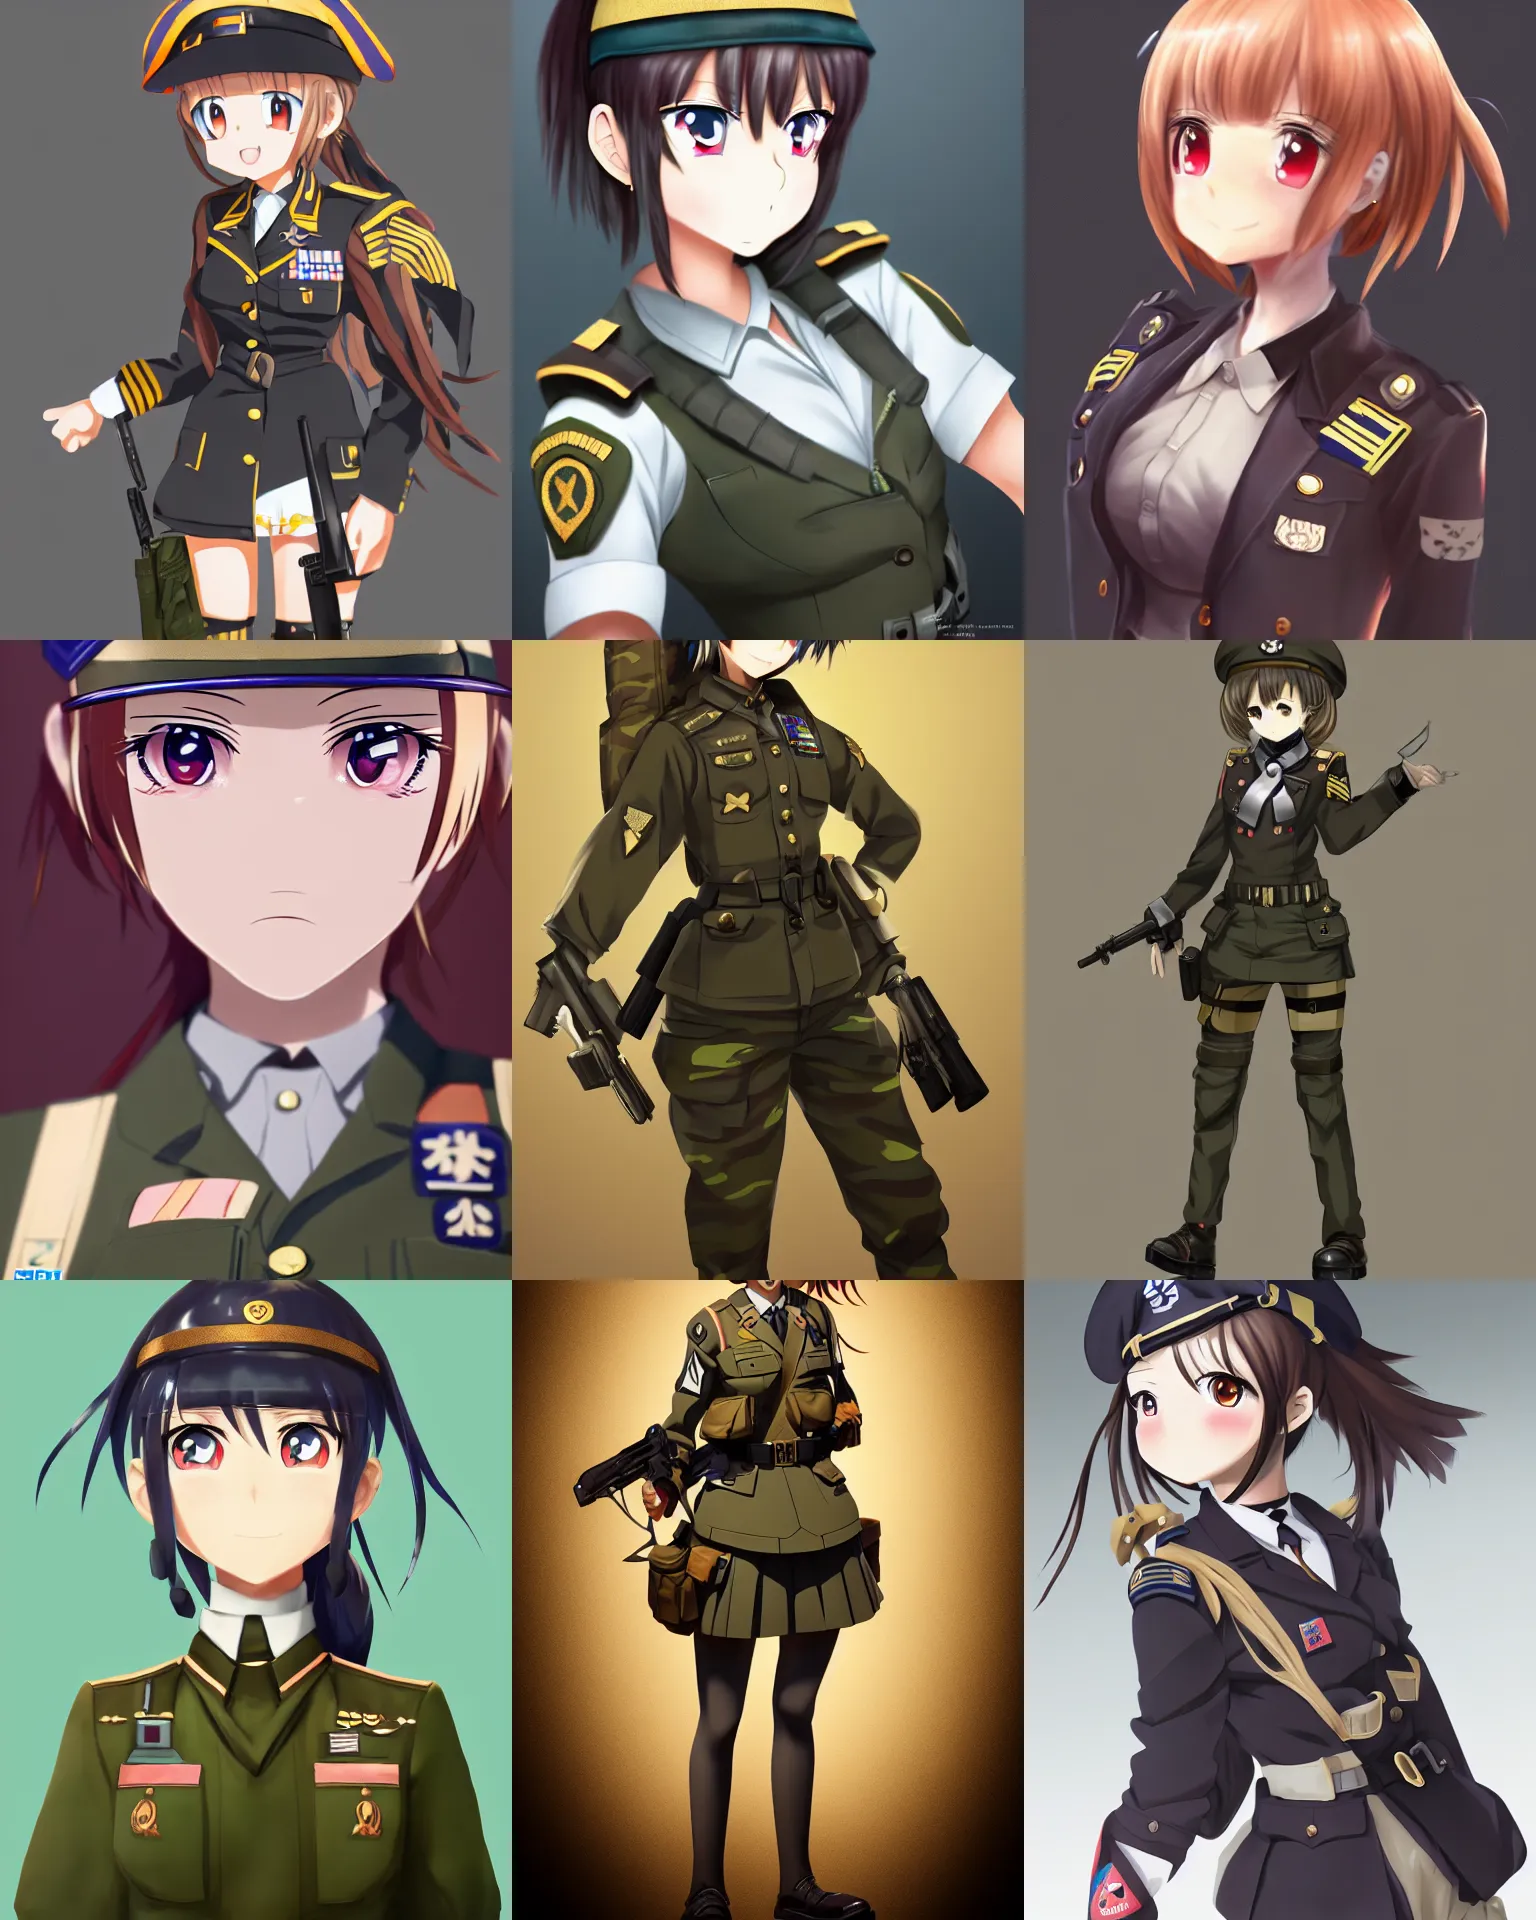 Prompt: anime girl with a military uniform, artisanal art, magical trending on artstation, volumetric lighting, cute - fine - face, intricate detail